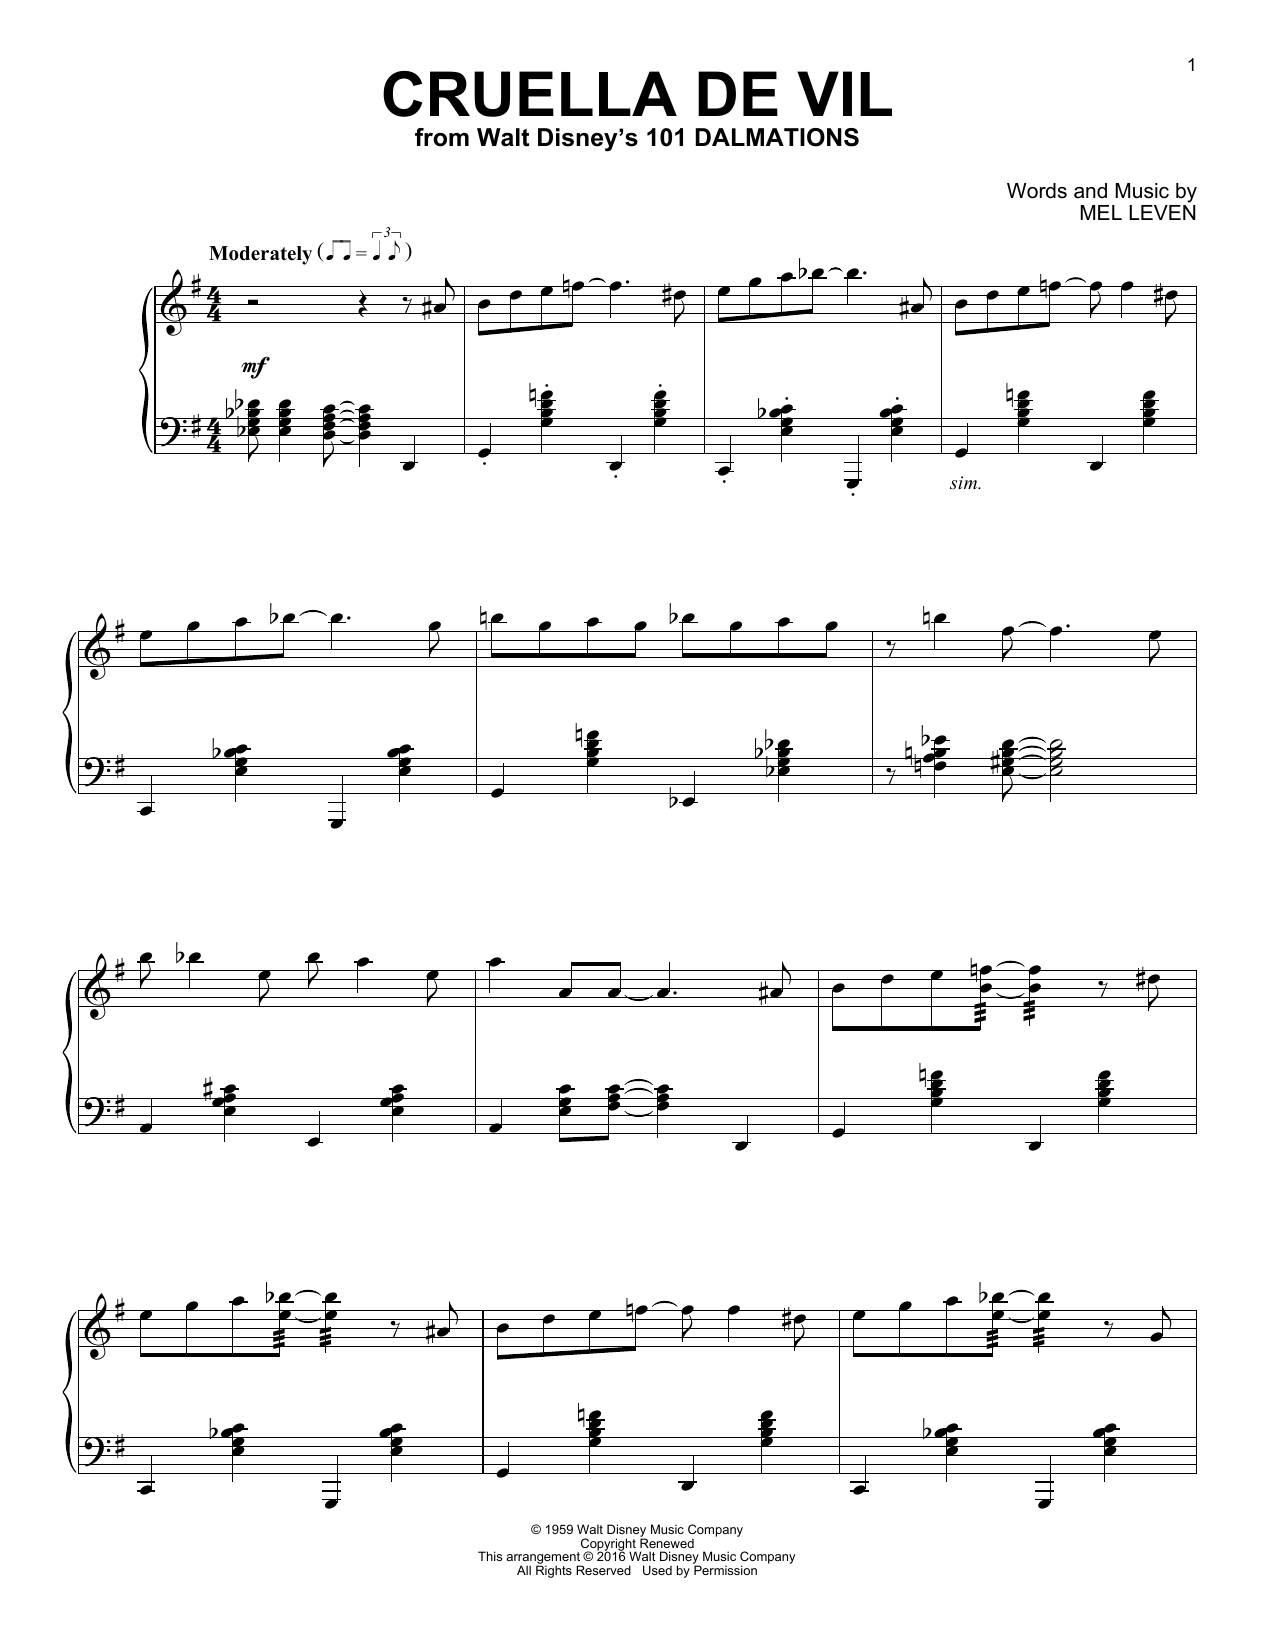 Mel Leven Cruella De Vil [Jazz version] Sheet Music Notes & Chords for Piano - Download or Print PDF